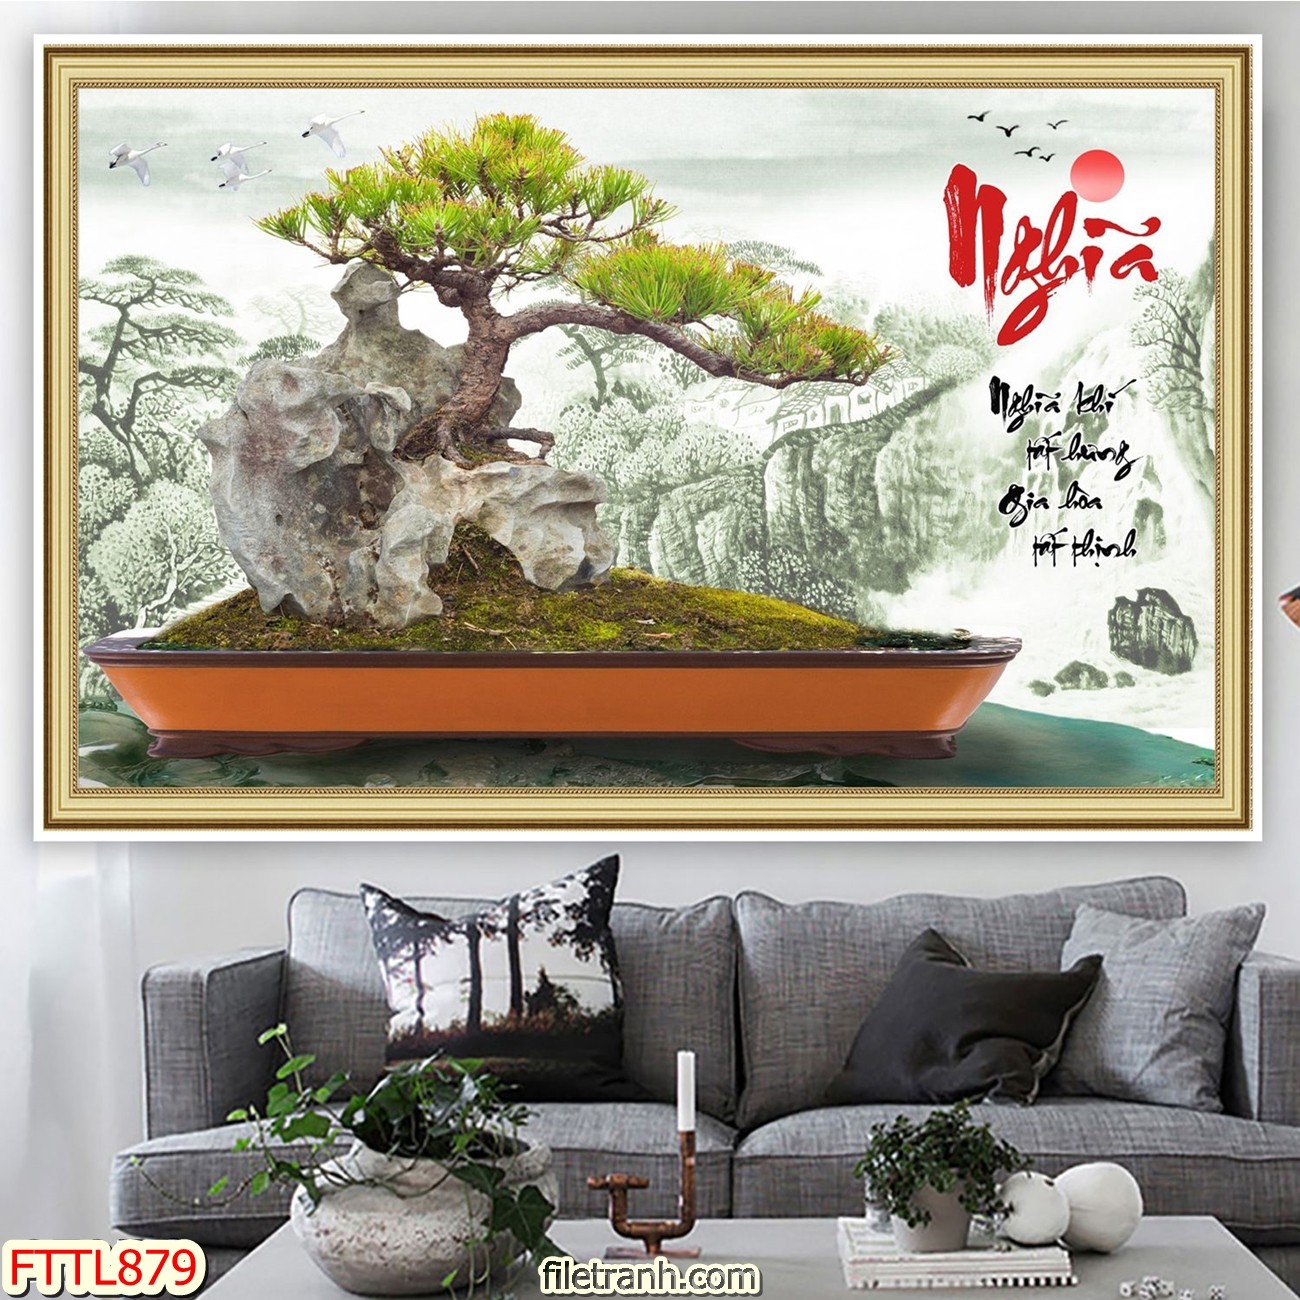 http://filetranh.com/file-tranh-chau-mai-bonsai/file-tranh-chau-mai-bonsai-fttl879.html